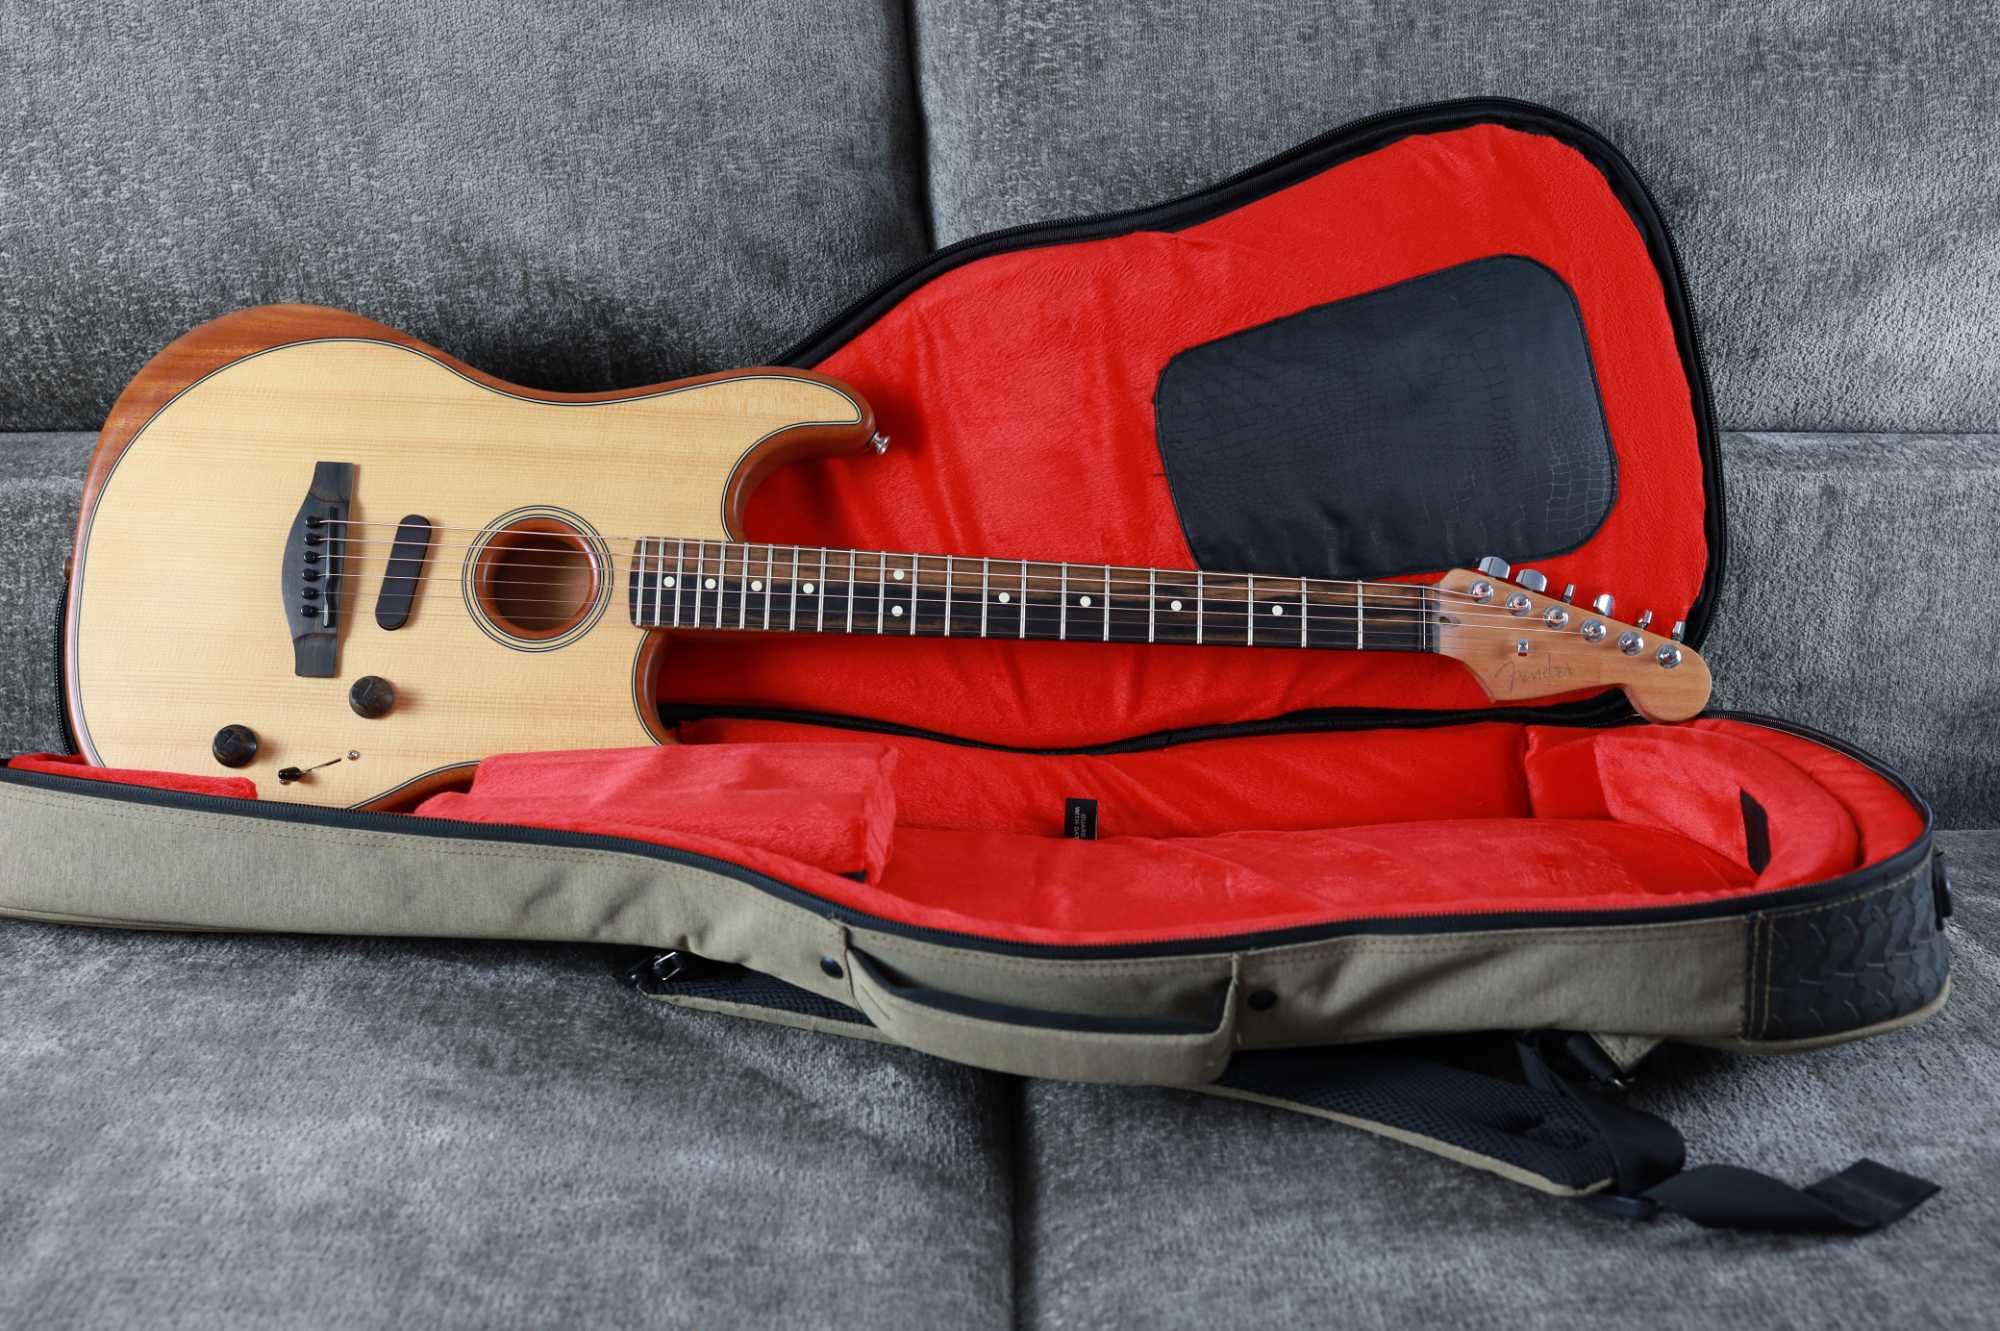 Fender Acoustasonic USA Stratocaster '20 - Електро-акустична гітара